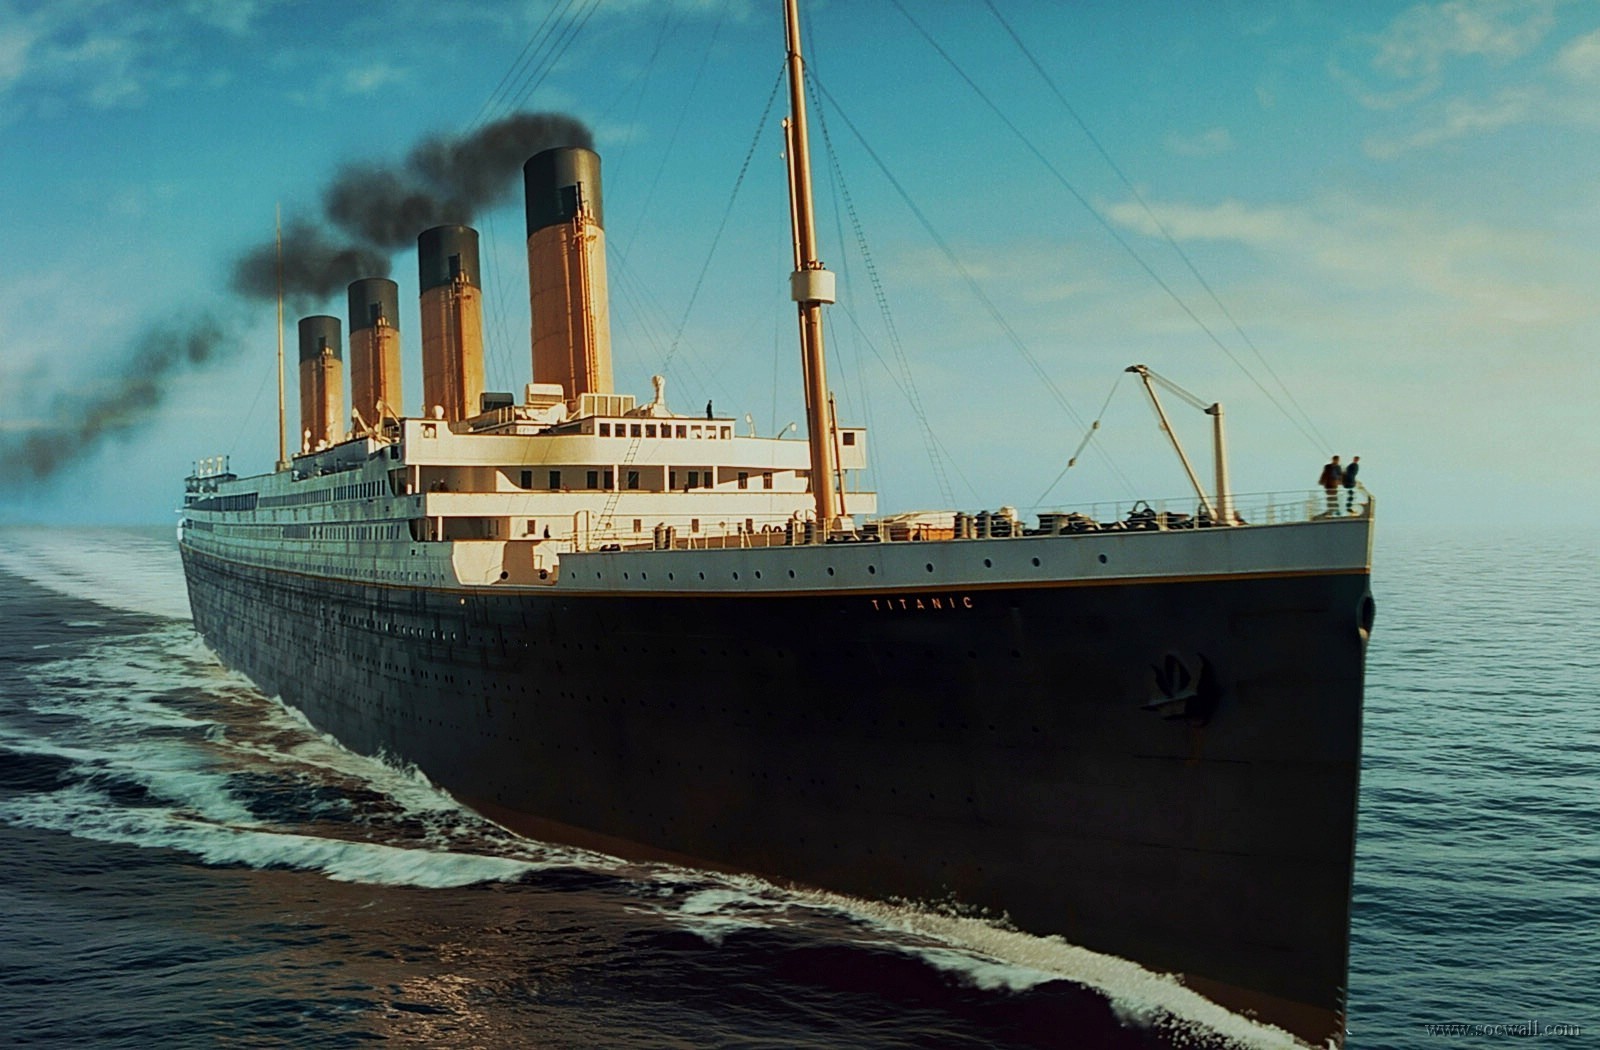 Titanic Desktop Wallpaper